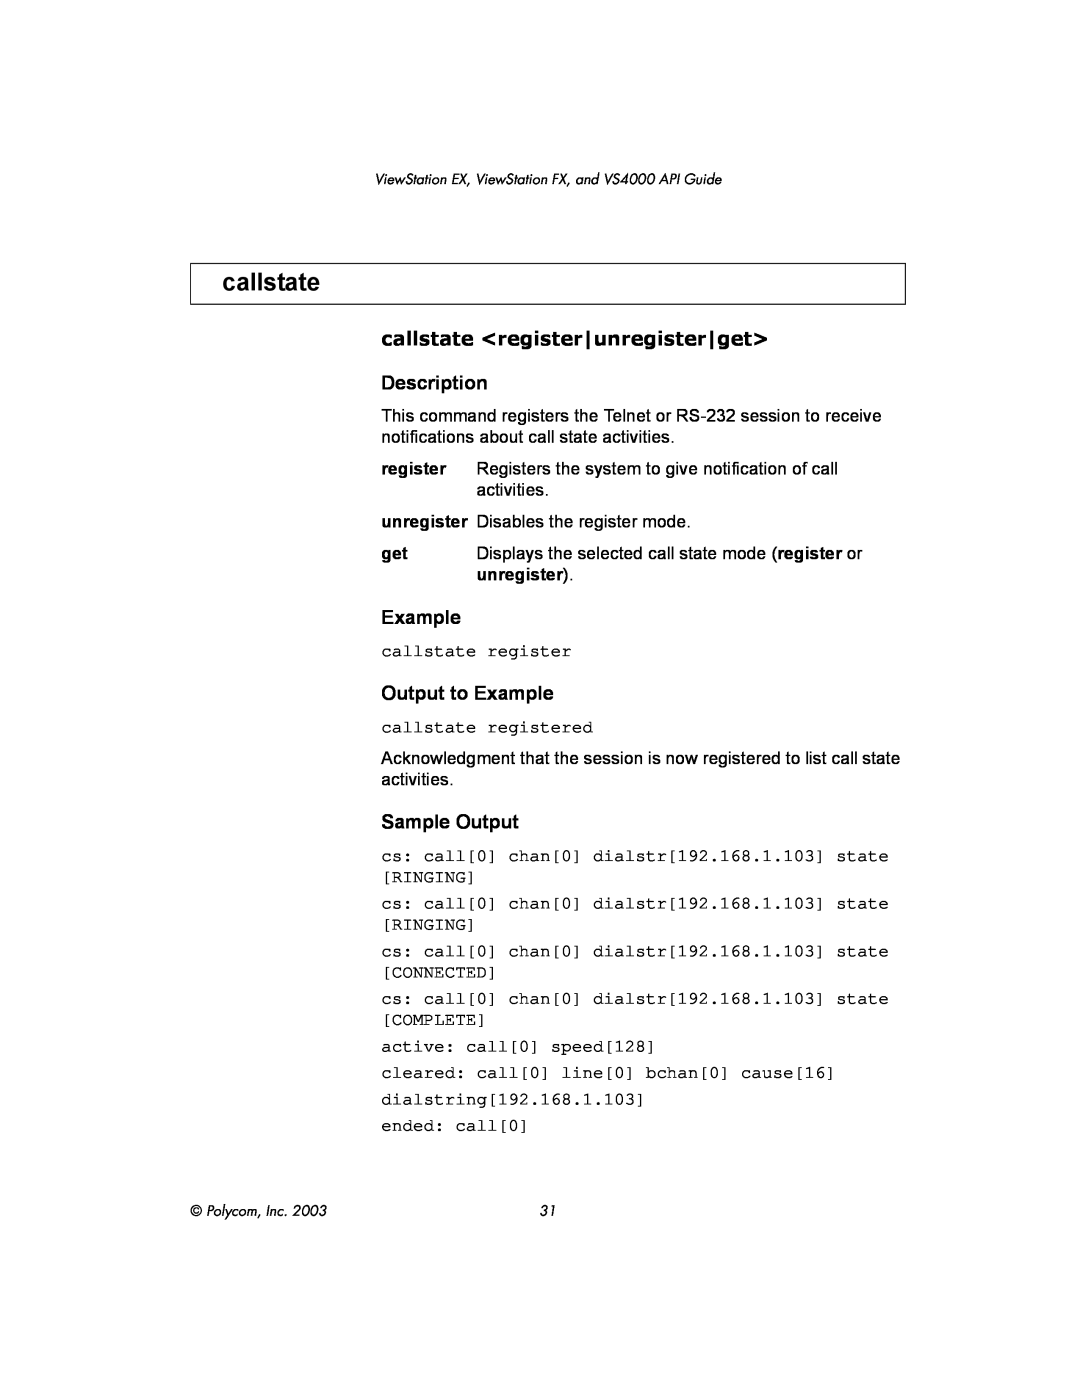 Polycom VIEWSTATION EX manual callstate <register|unregister|get>, Output to Example, Description, Sample Output 